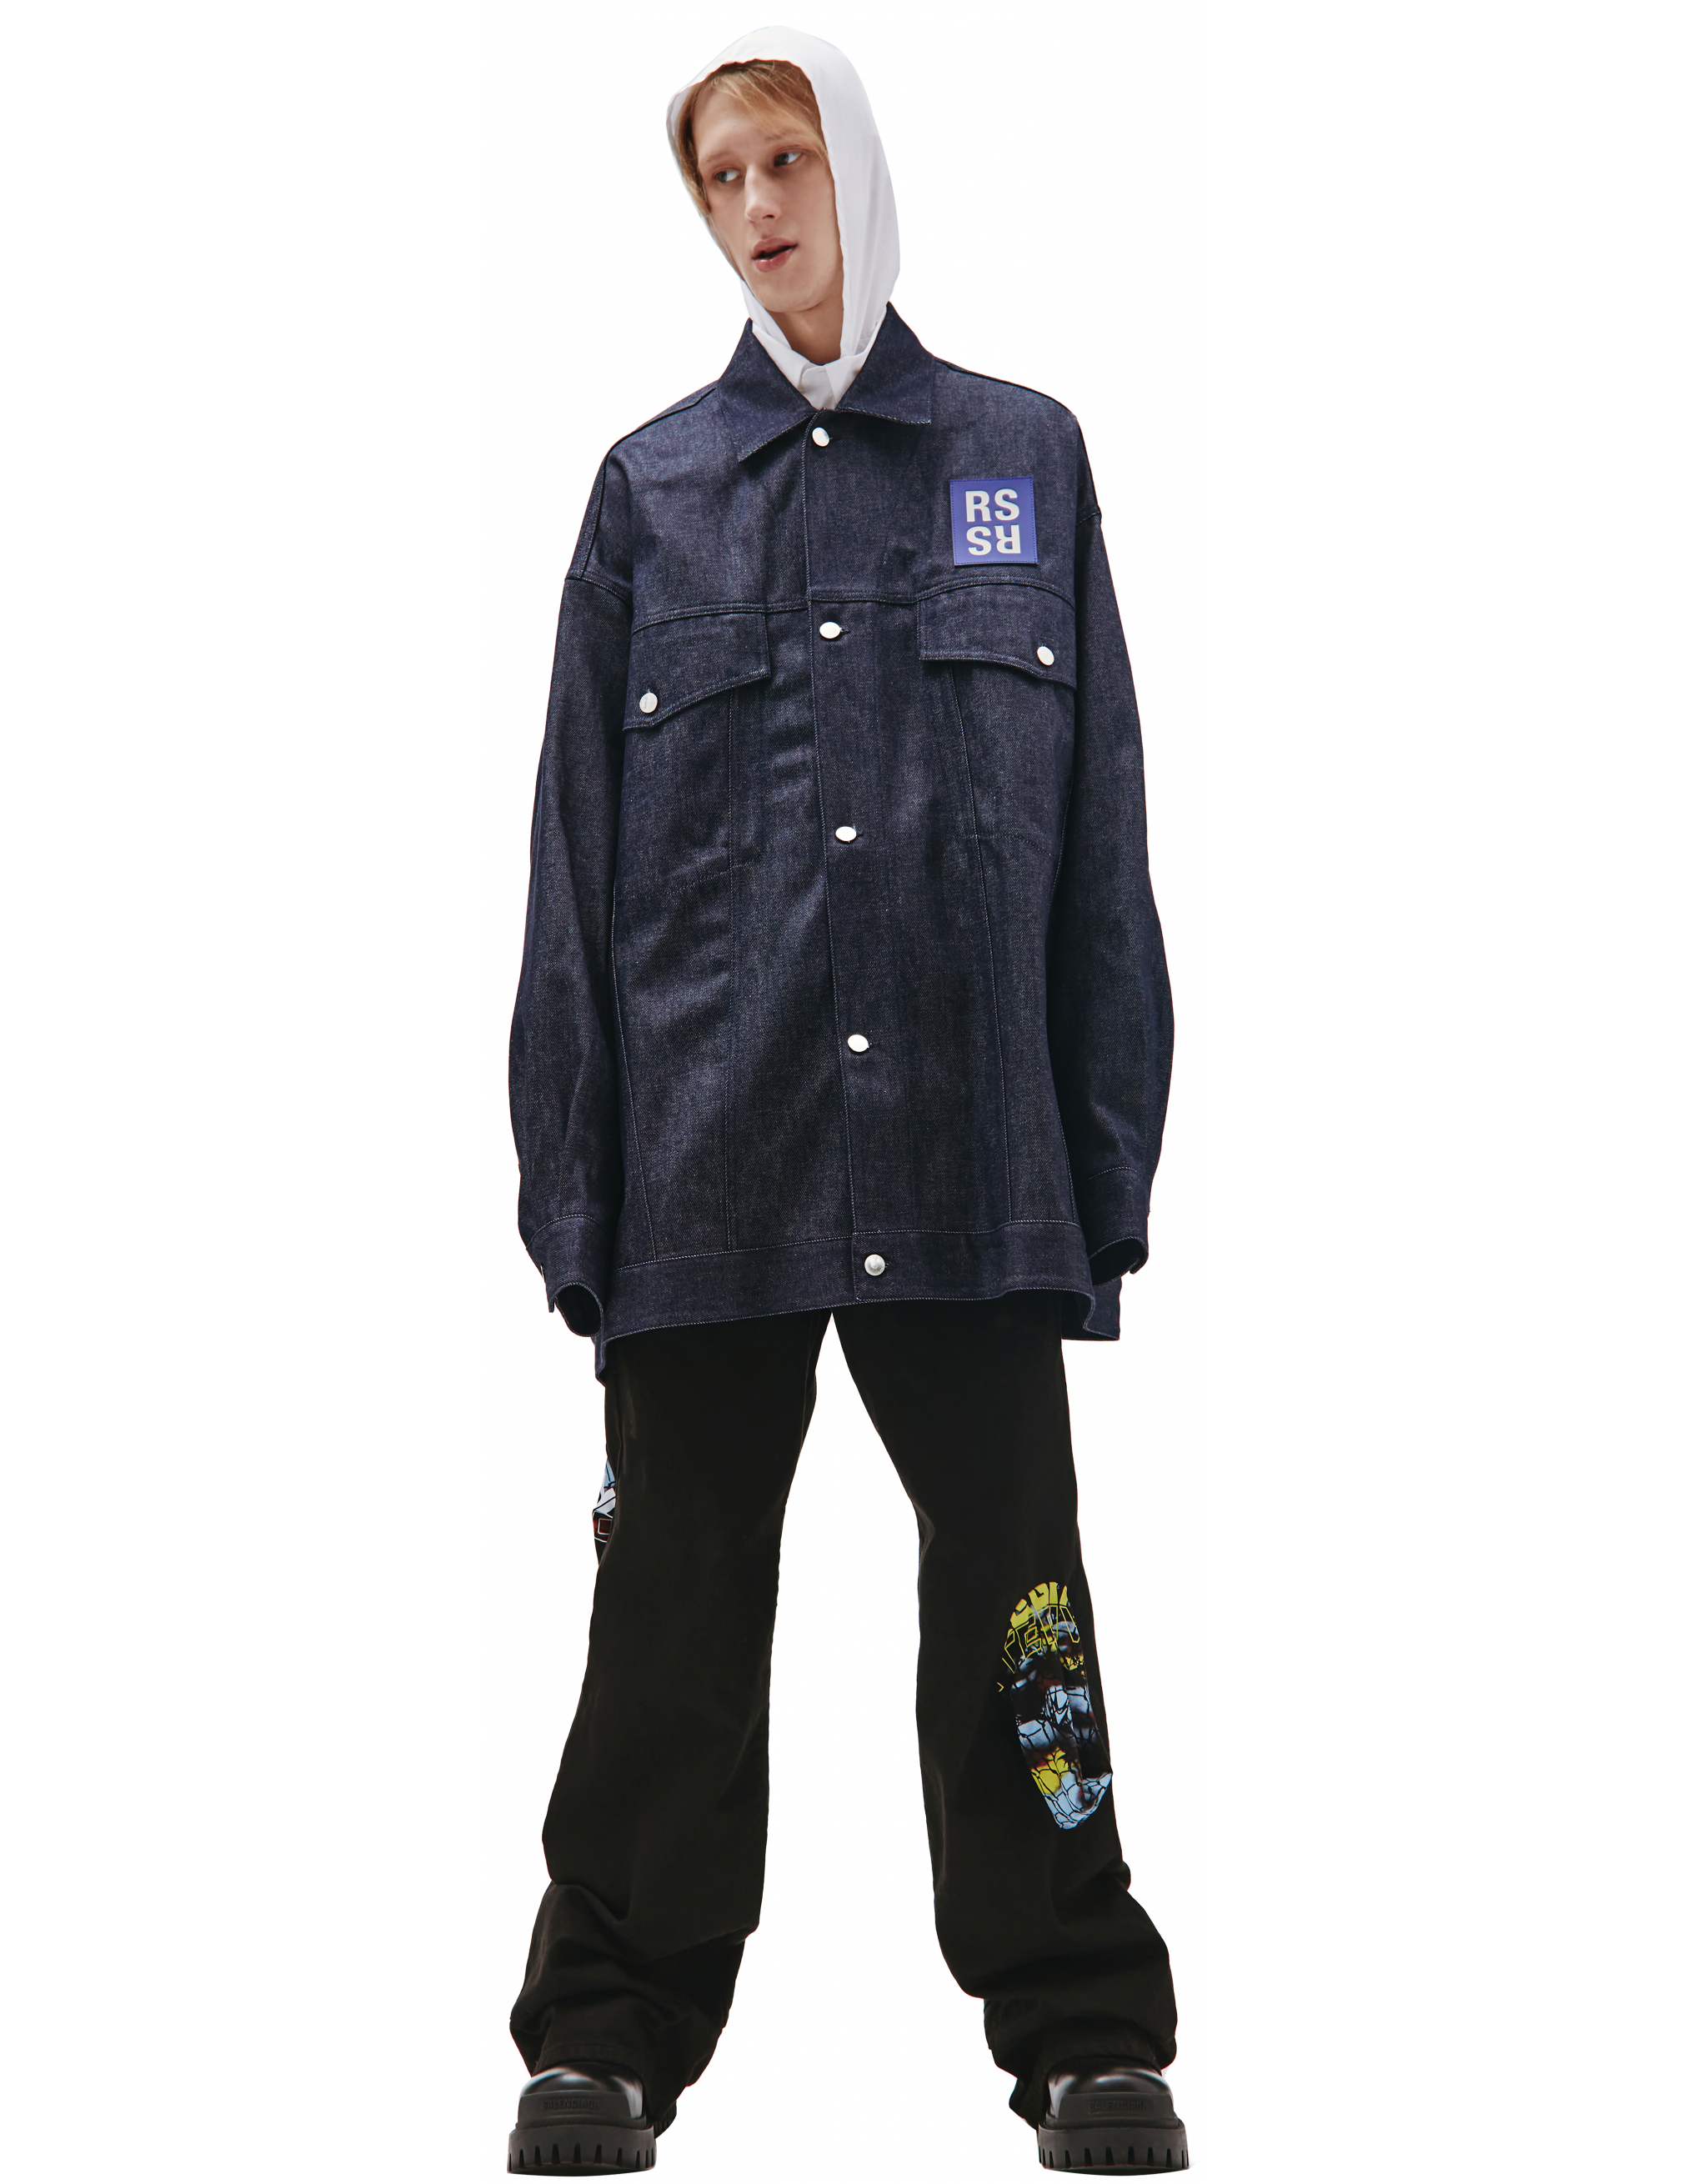 Джинсовая куртка оверсайз с логотипом - Raf Simons 212-M723-10031-0044